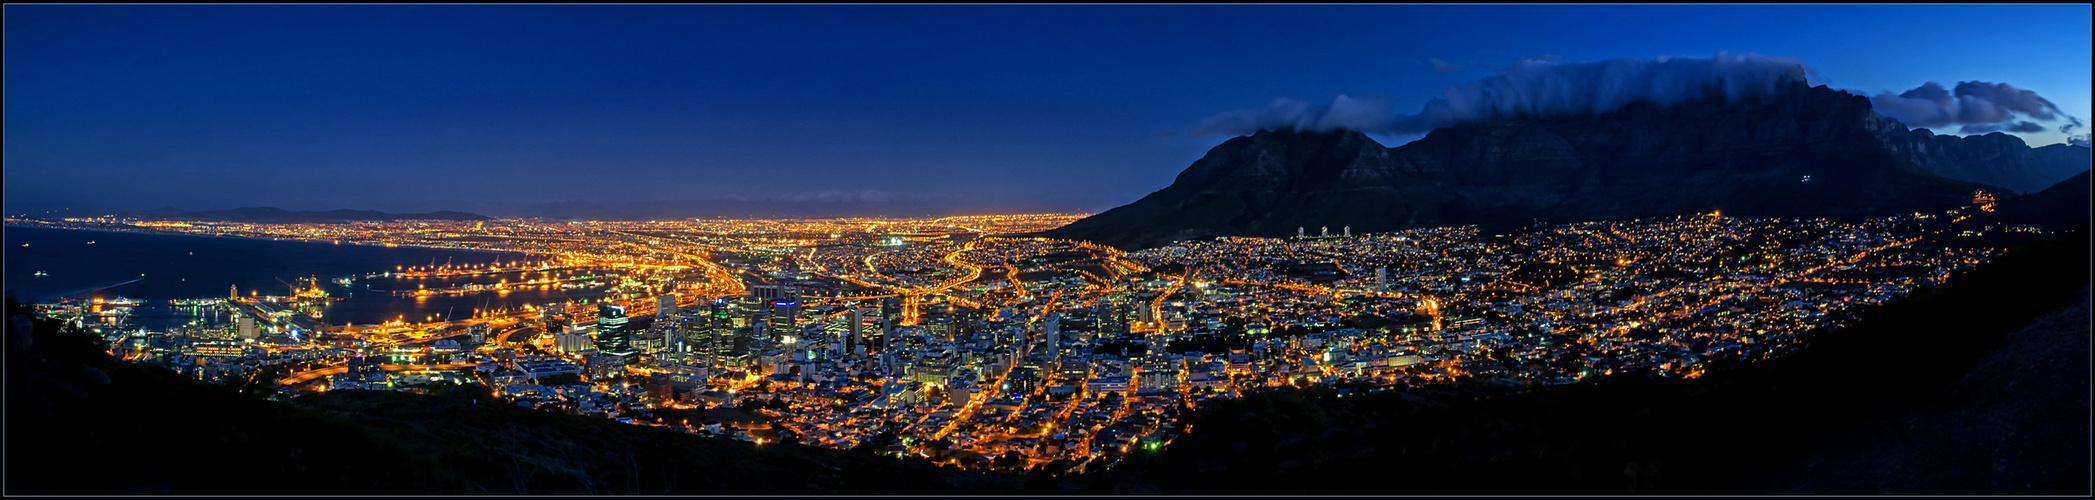 Cape Town von Annette He